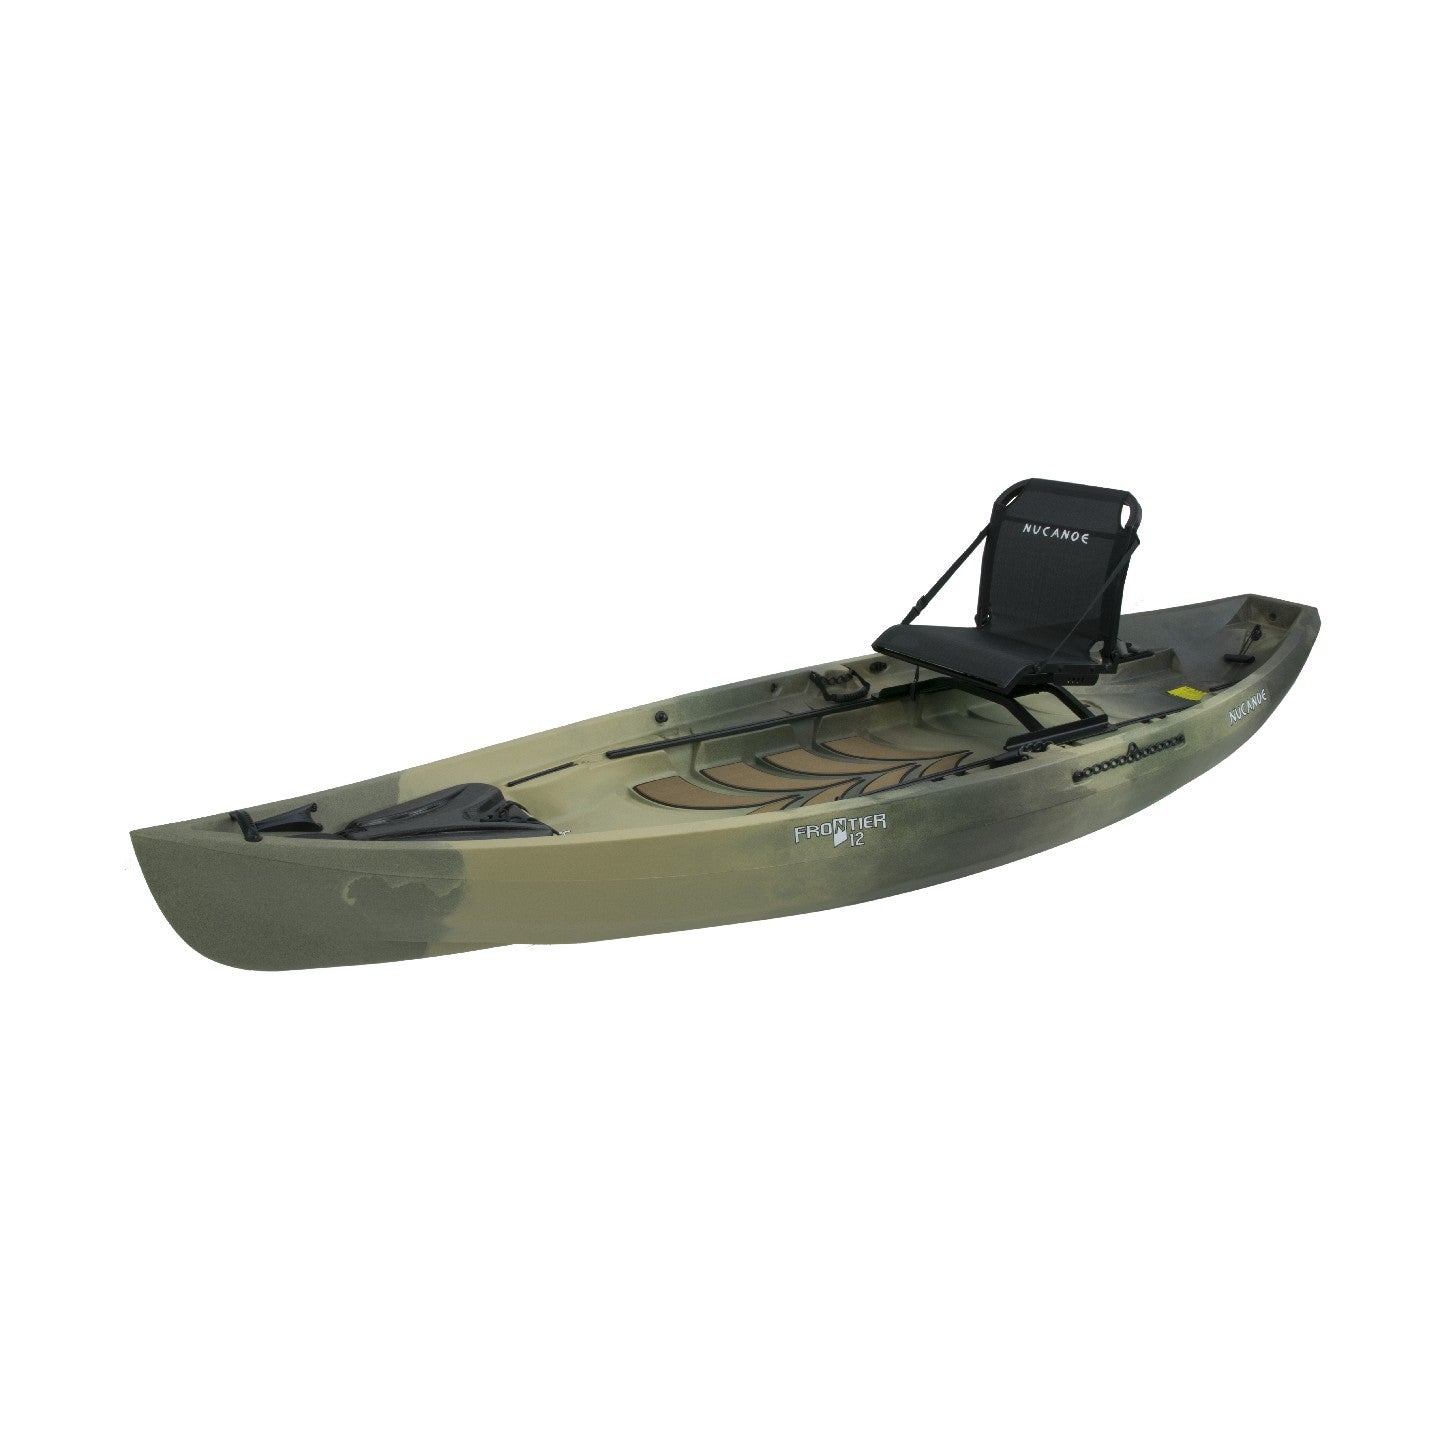 2700 – NuCanoe Solo Trailer, Kayaks, Fishing, Hunting